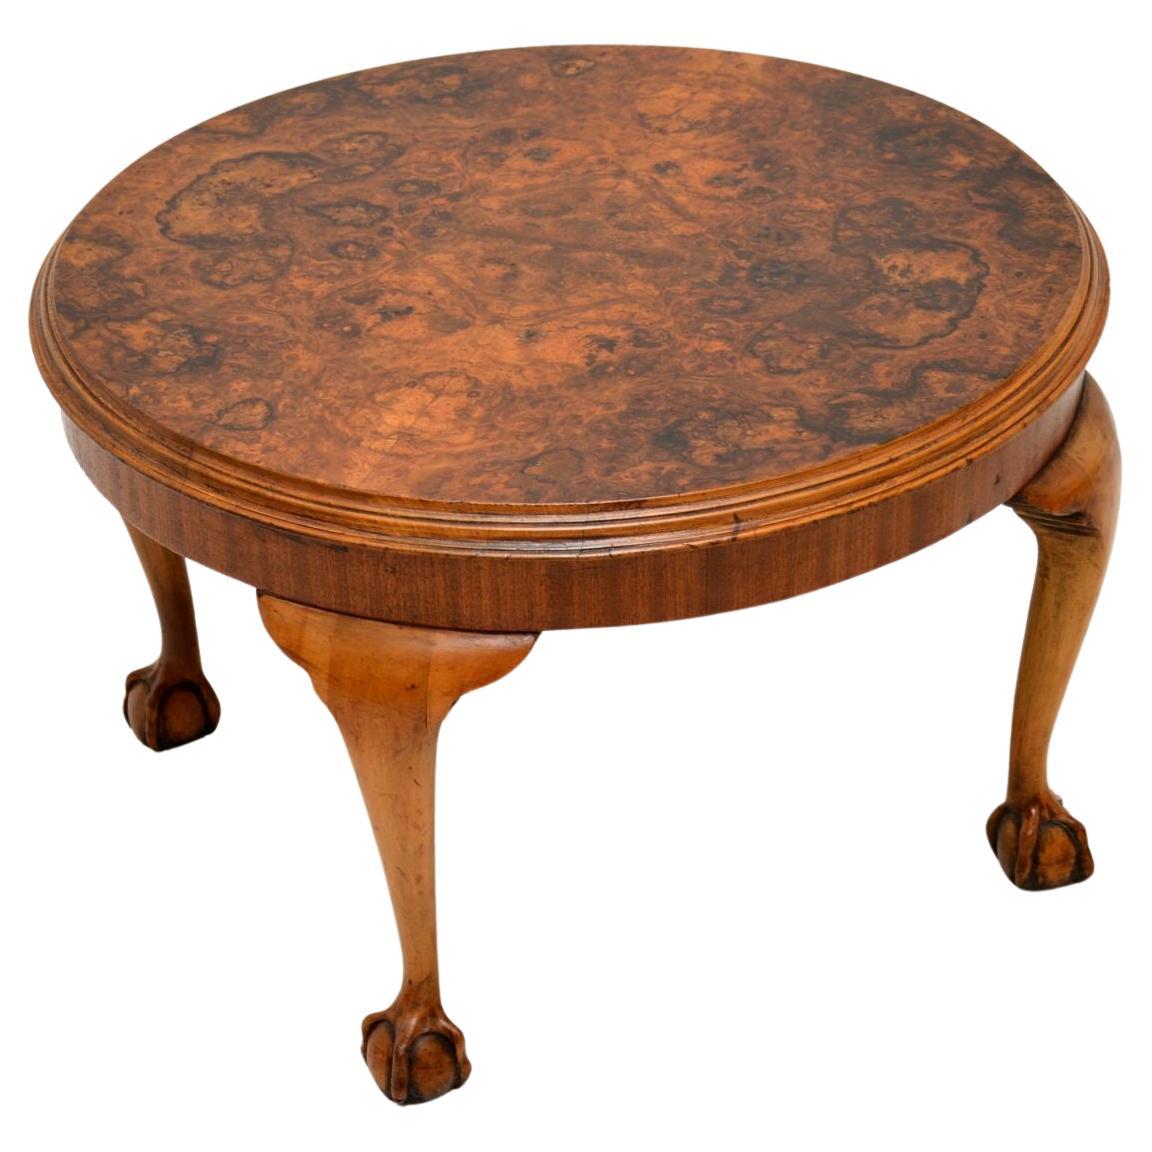 Antique Burr Walnut Coffee Table